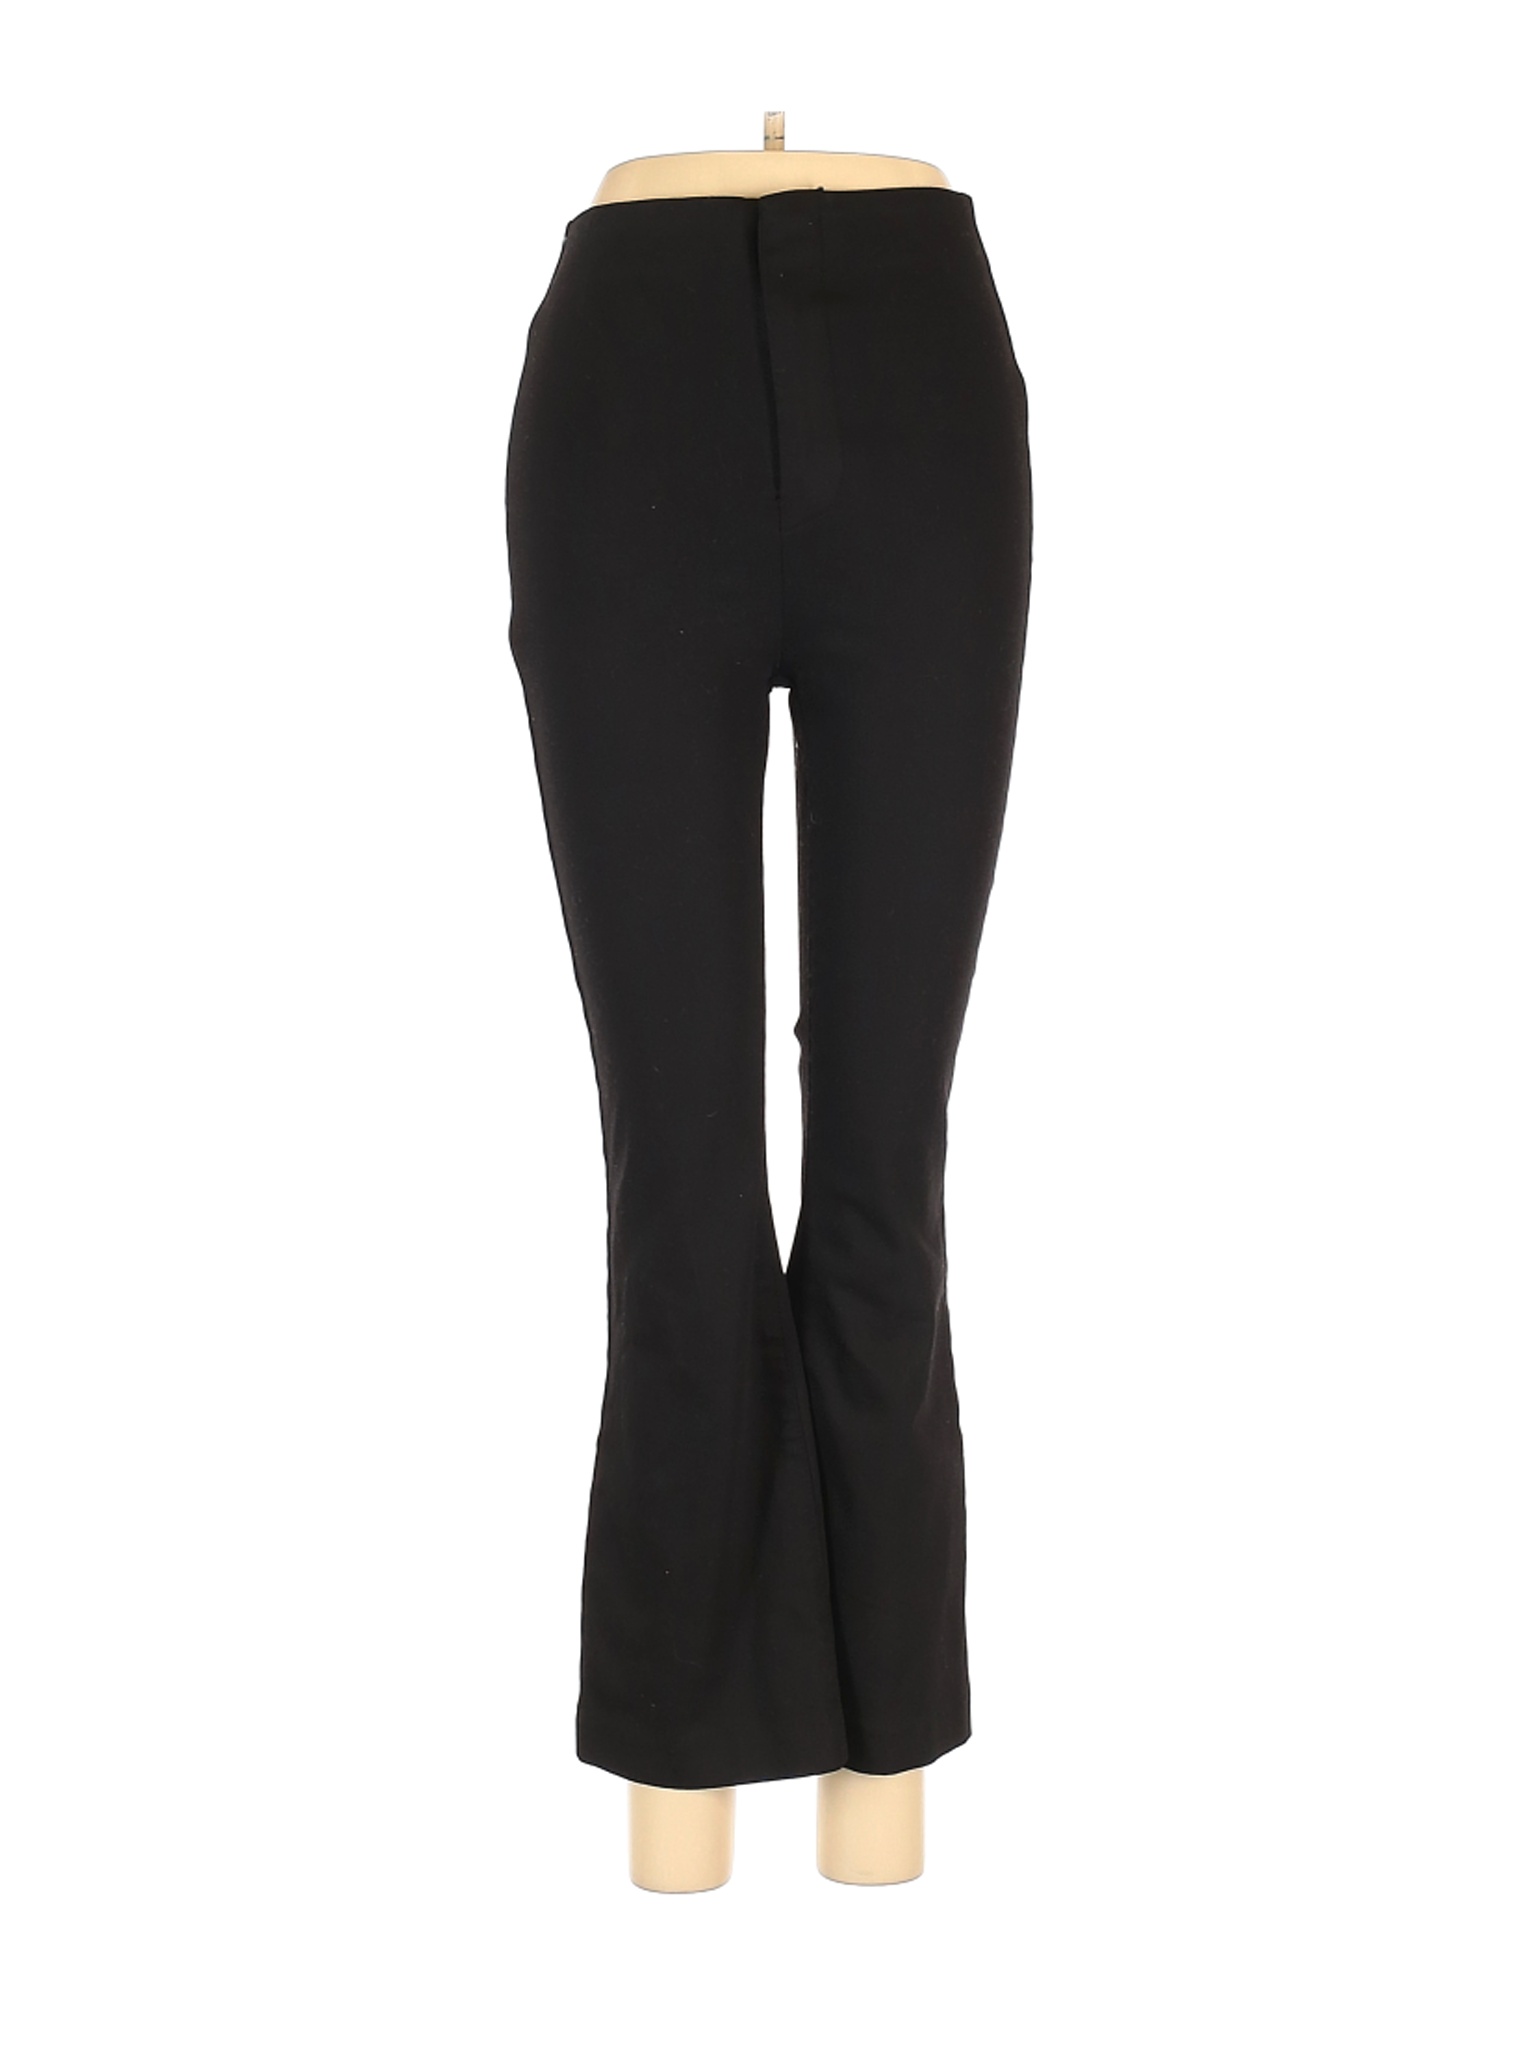 Madewell Women Black Casual Pants 26W | eBay